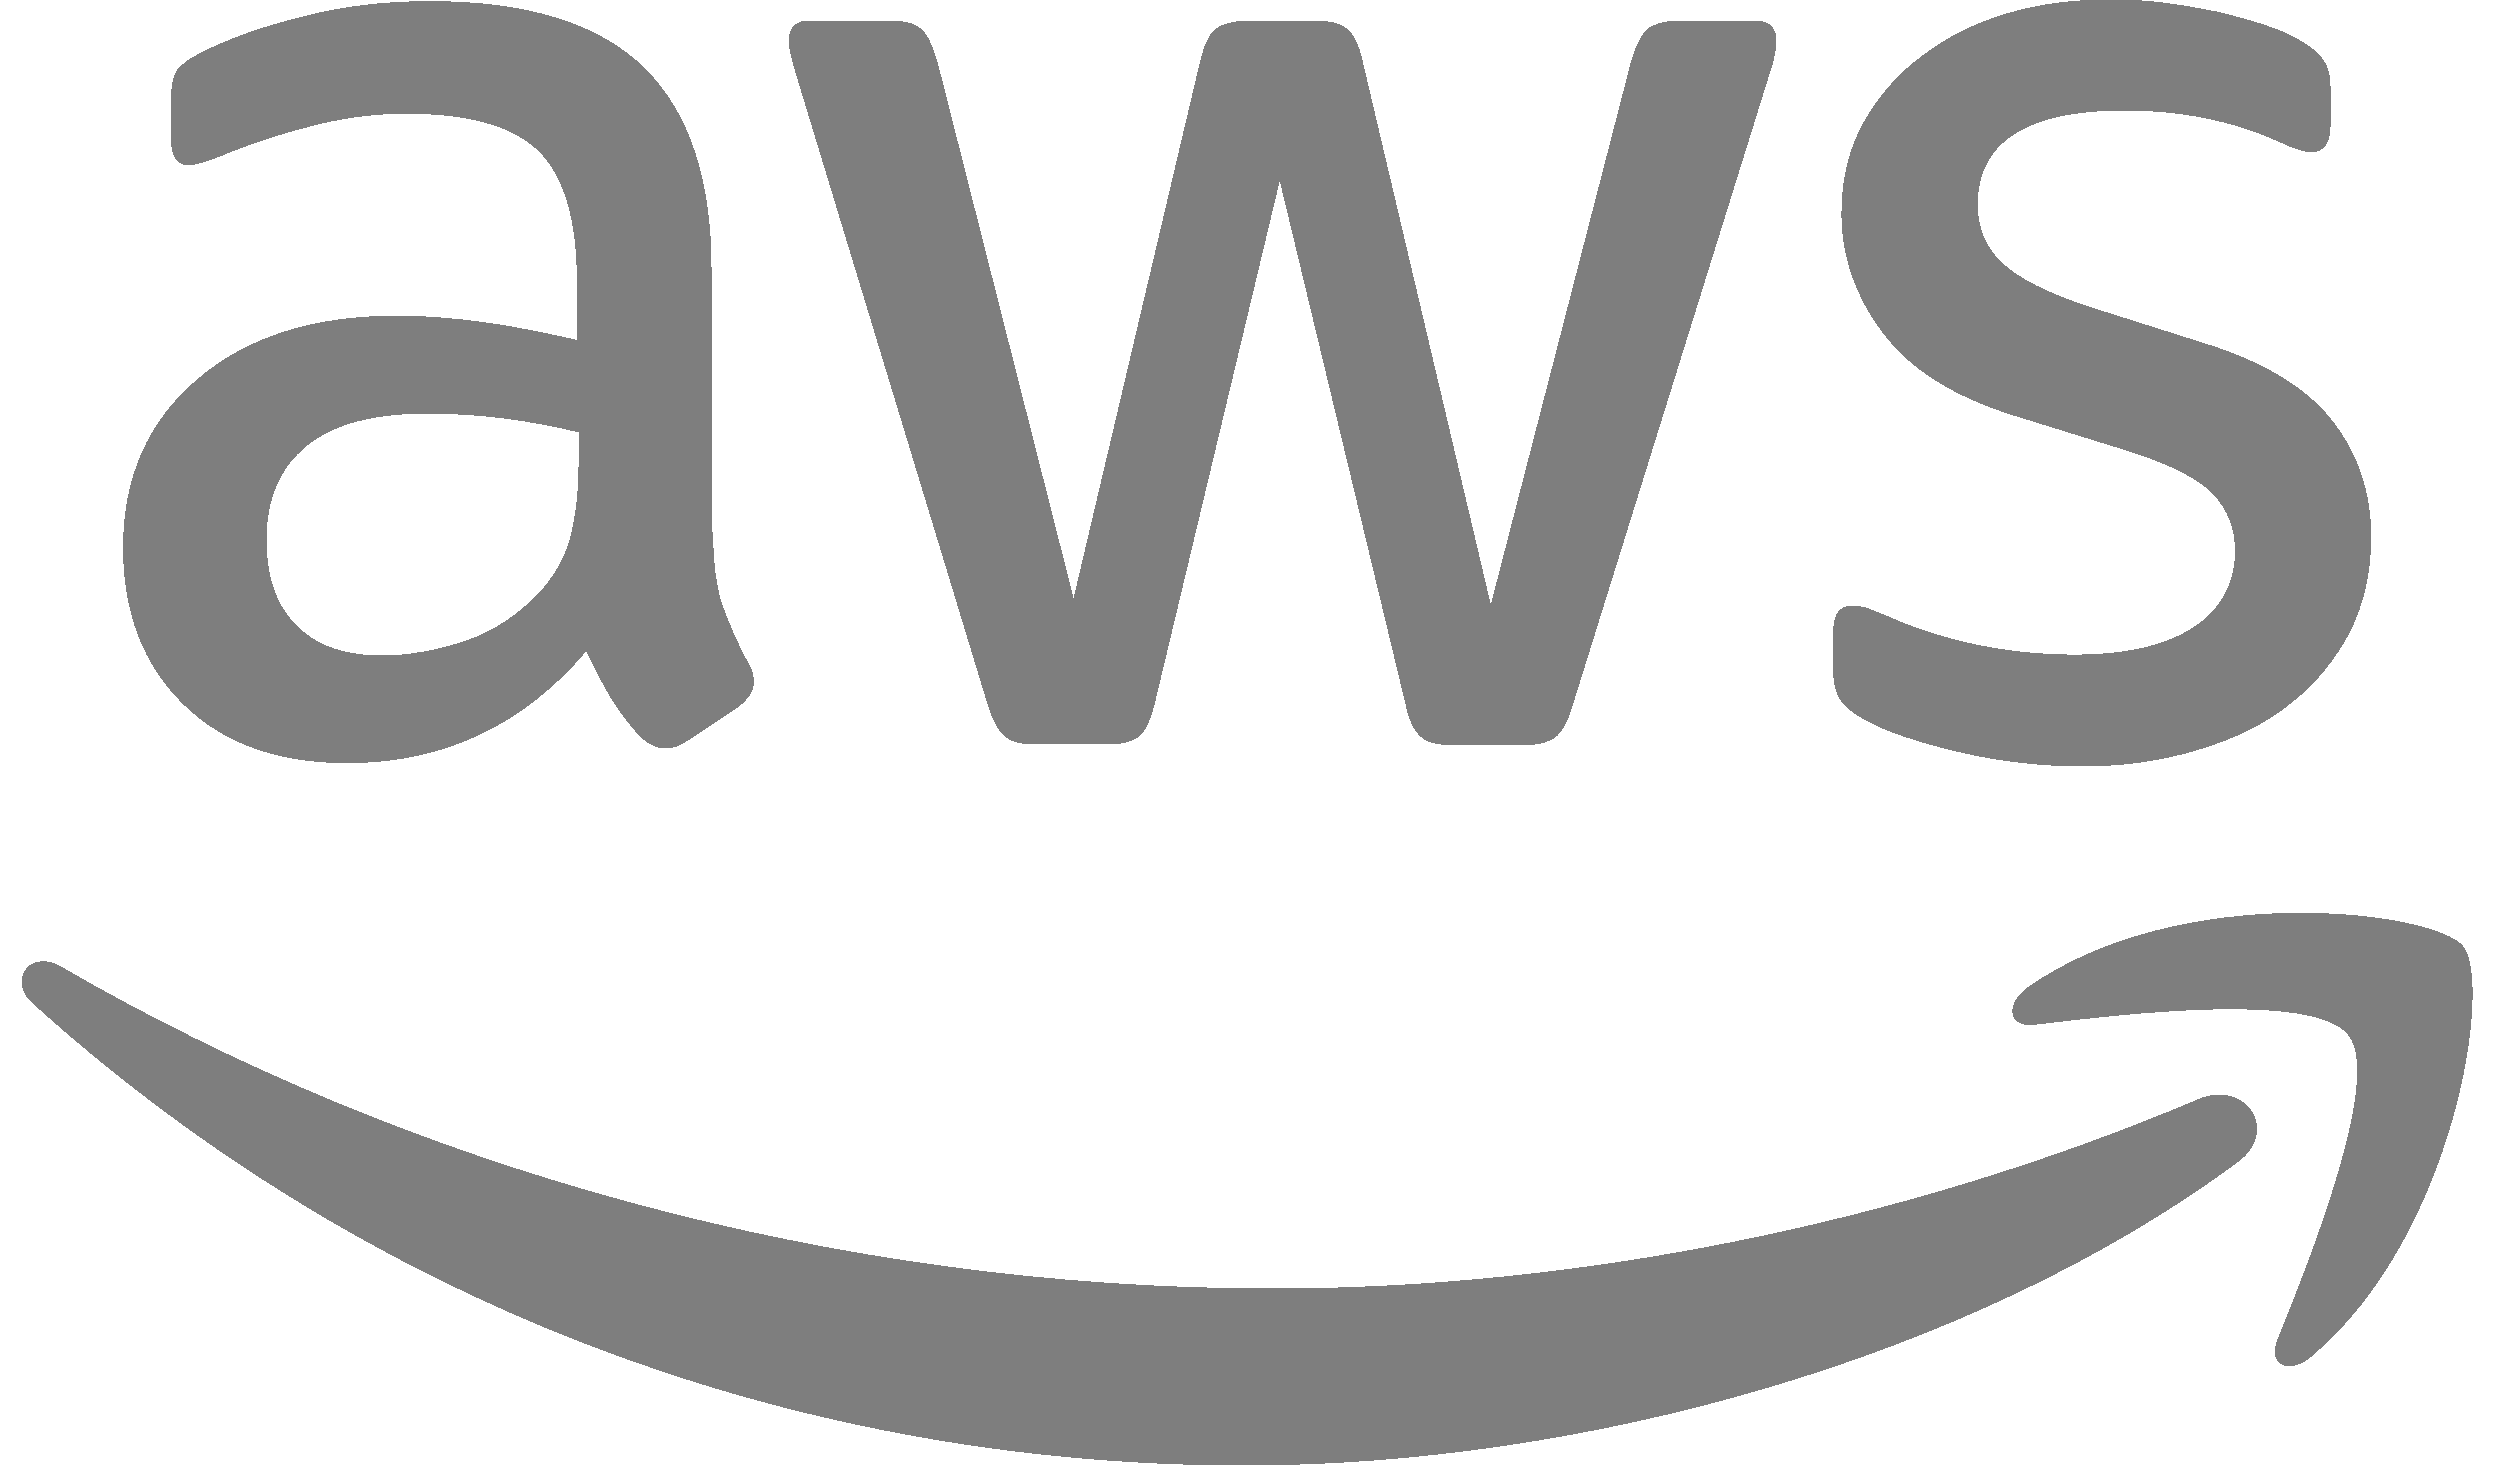 aws-logo